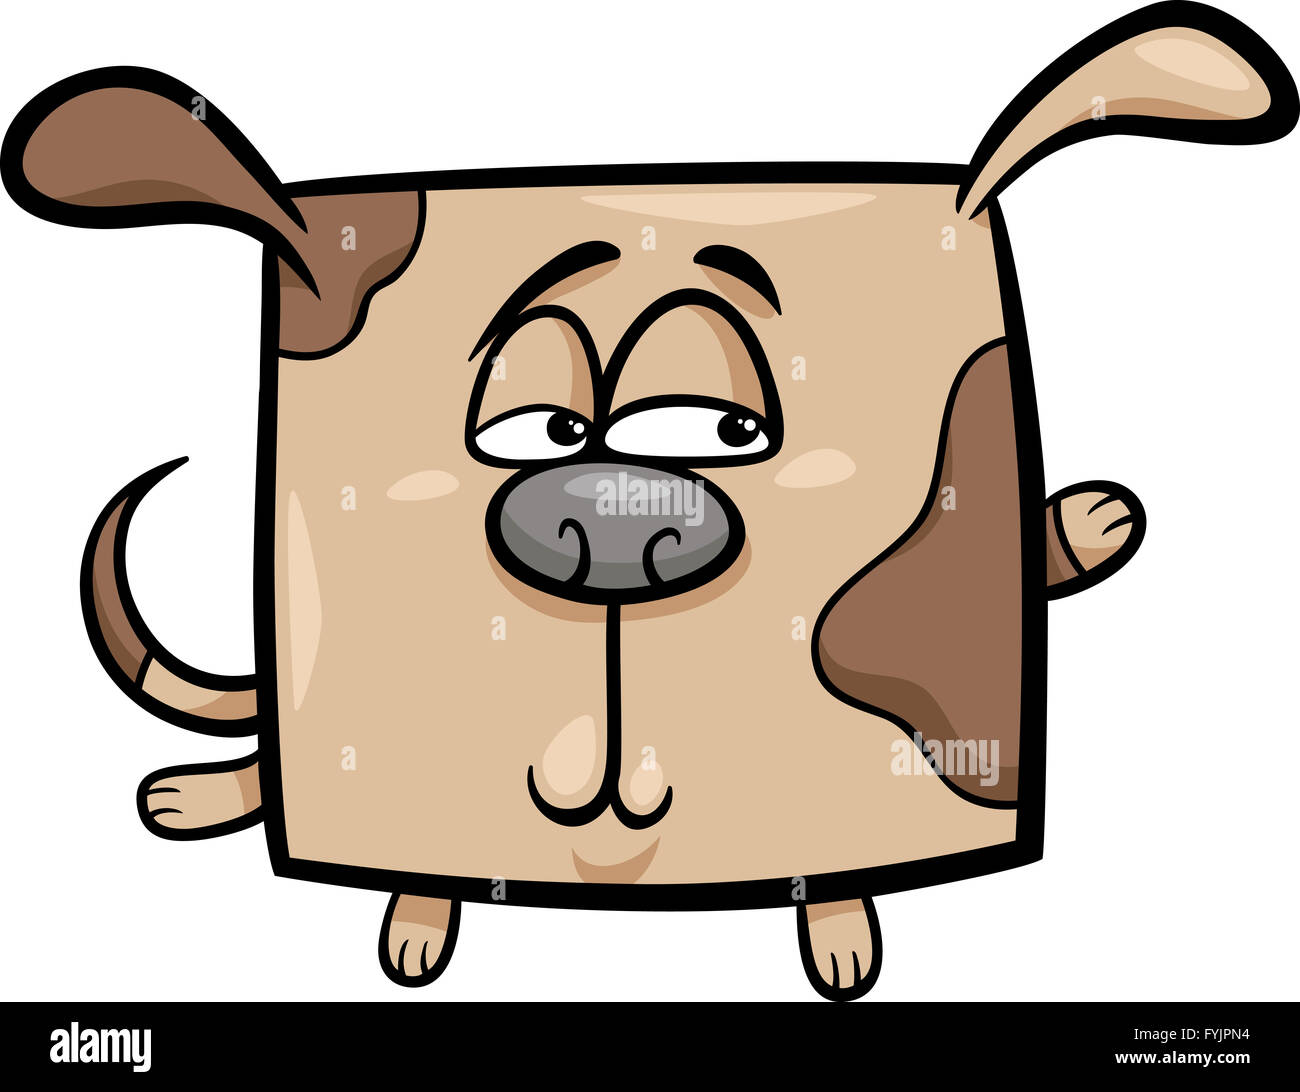 square dog cartoon illustration Stock Photo